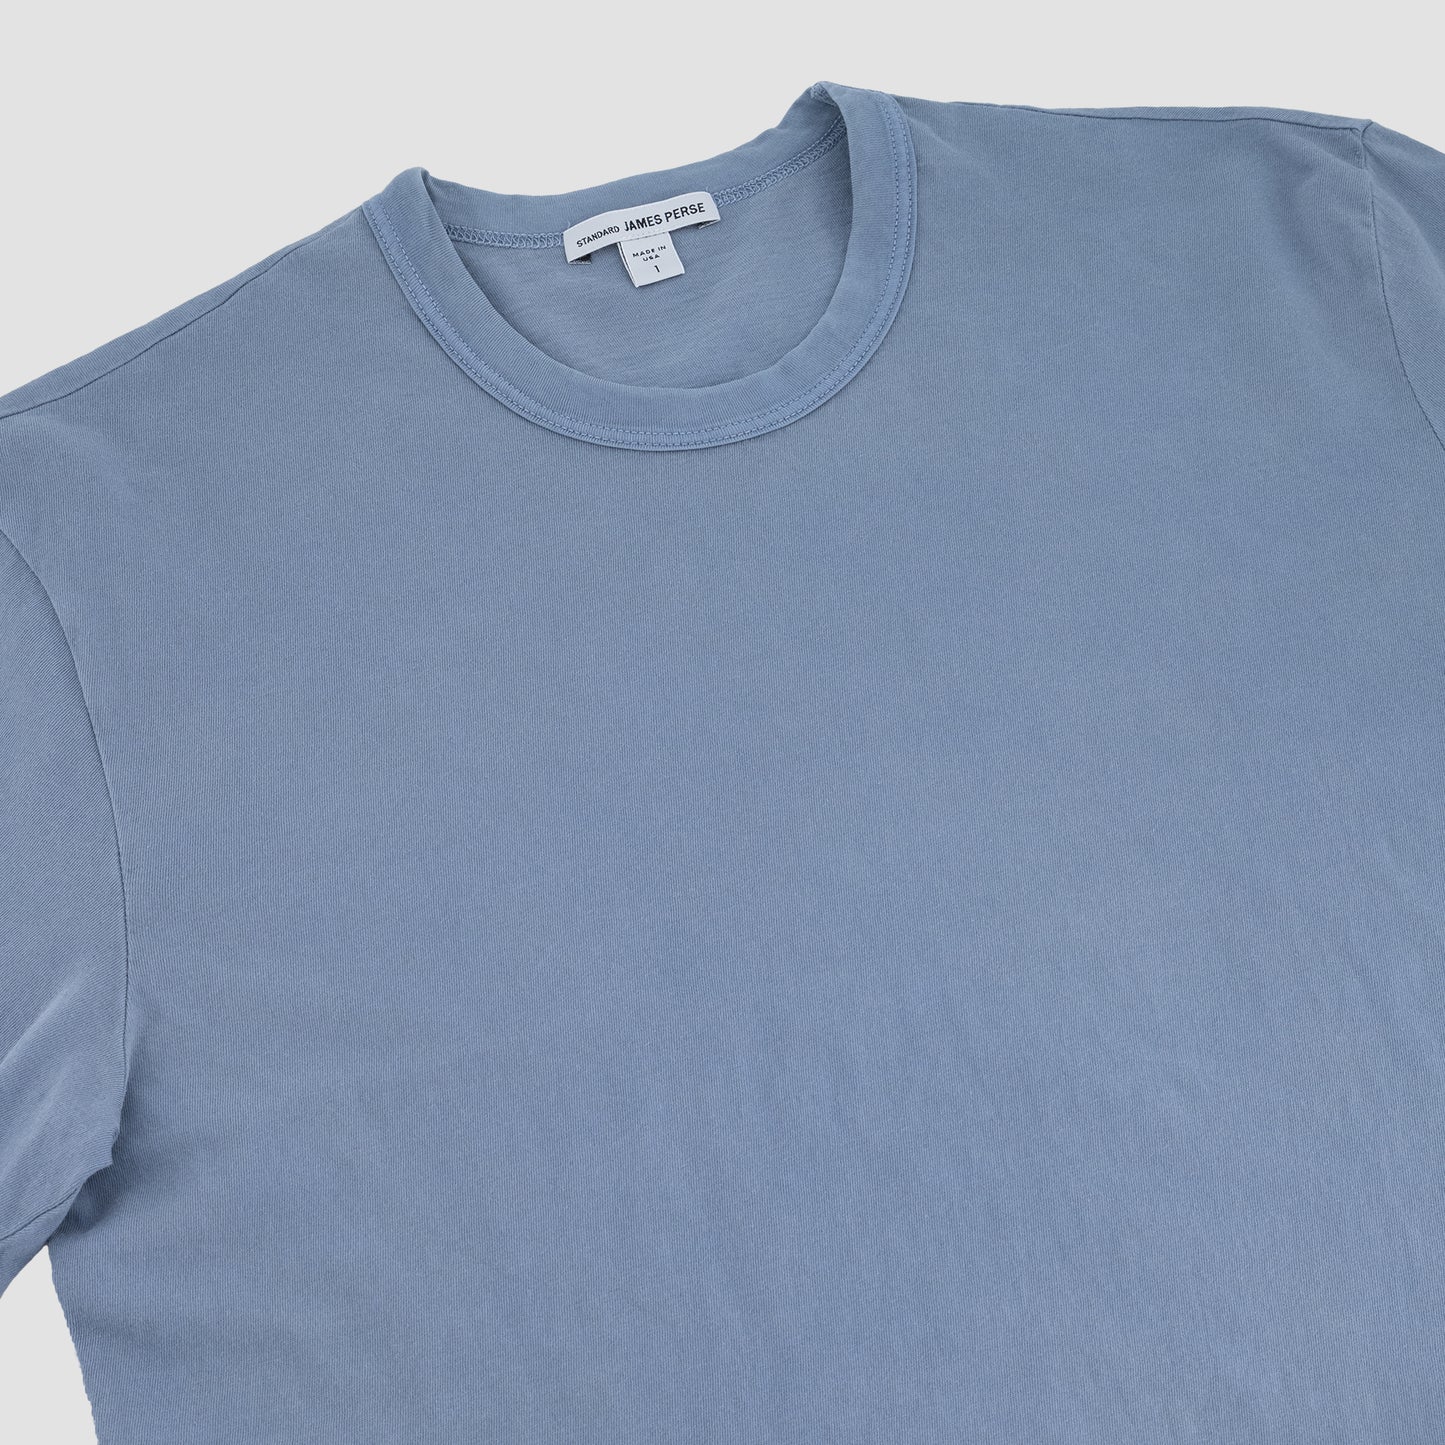 James Perse Short Sleeve Crew Neck T-Shirt Blue Stone